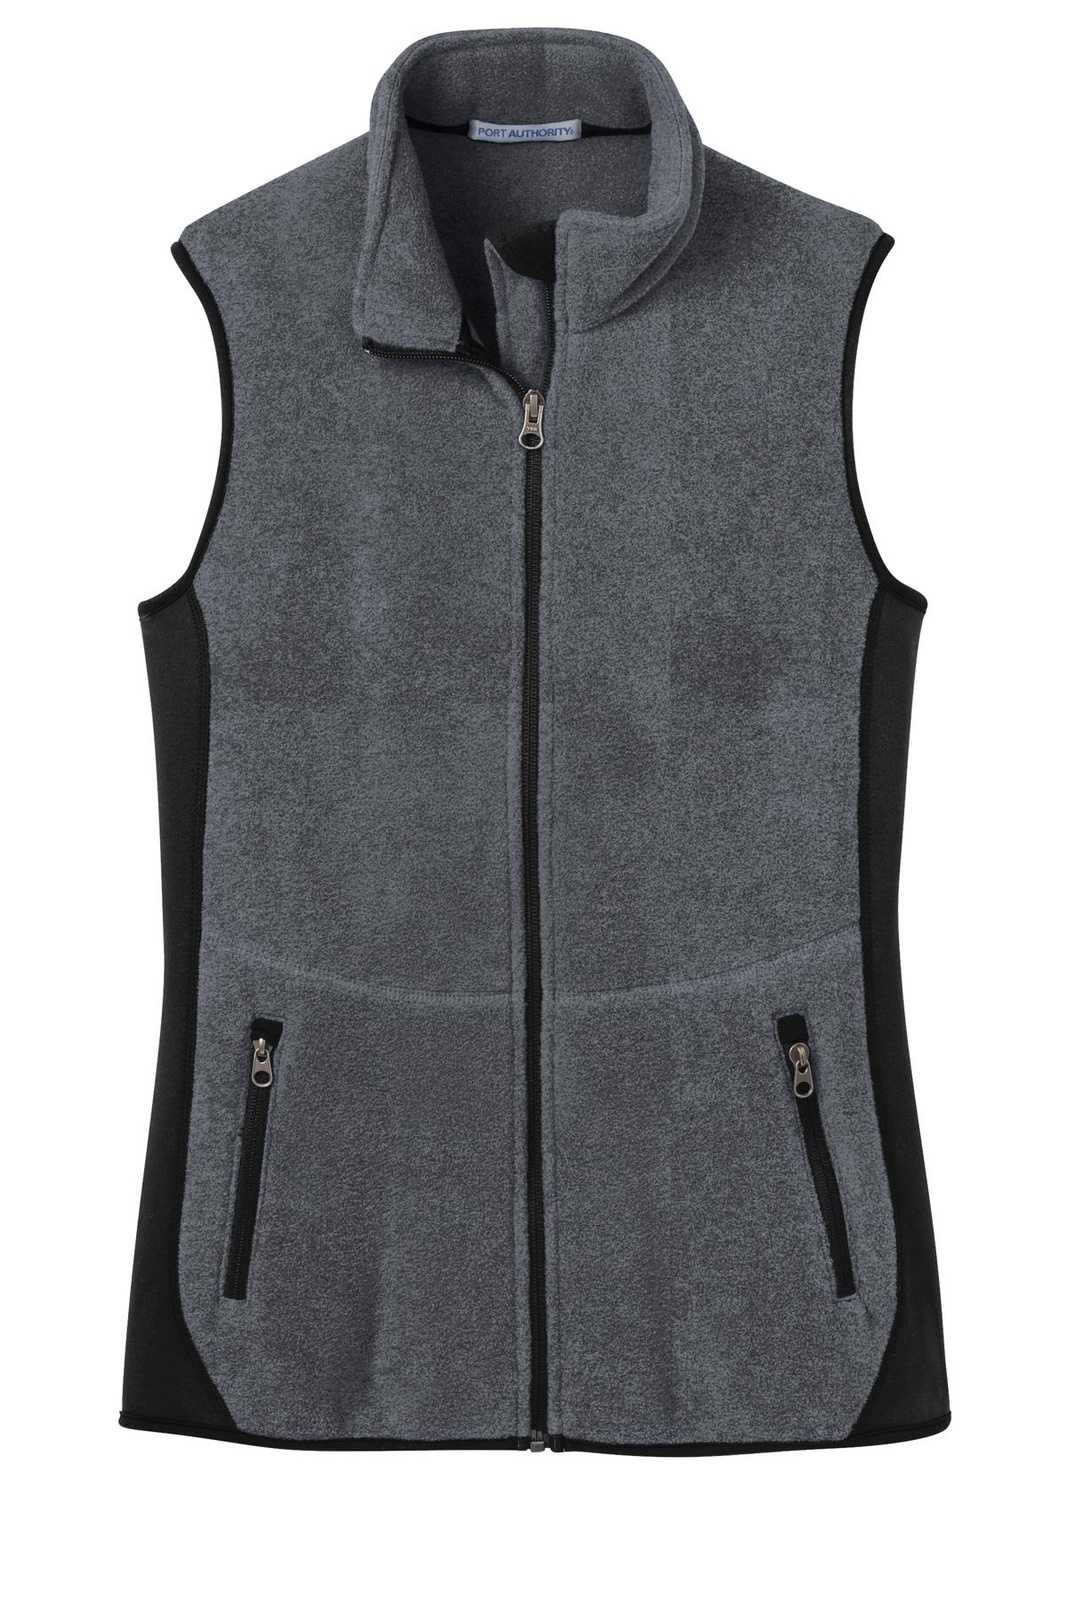 Port Authority L228 Ladies R-Tek Pro Fleece Full-Zip Vest - Charcoal Heather Black - HIT a Double - 5